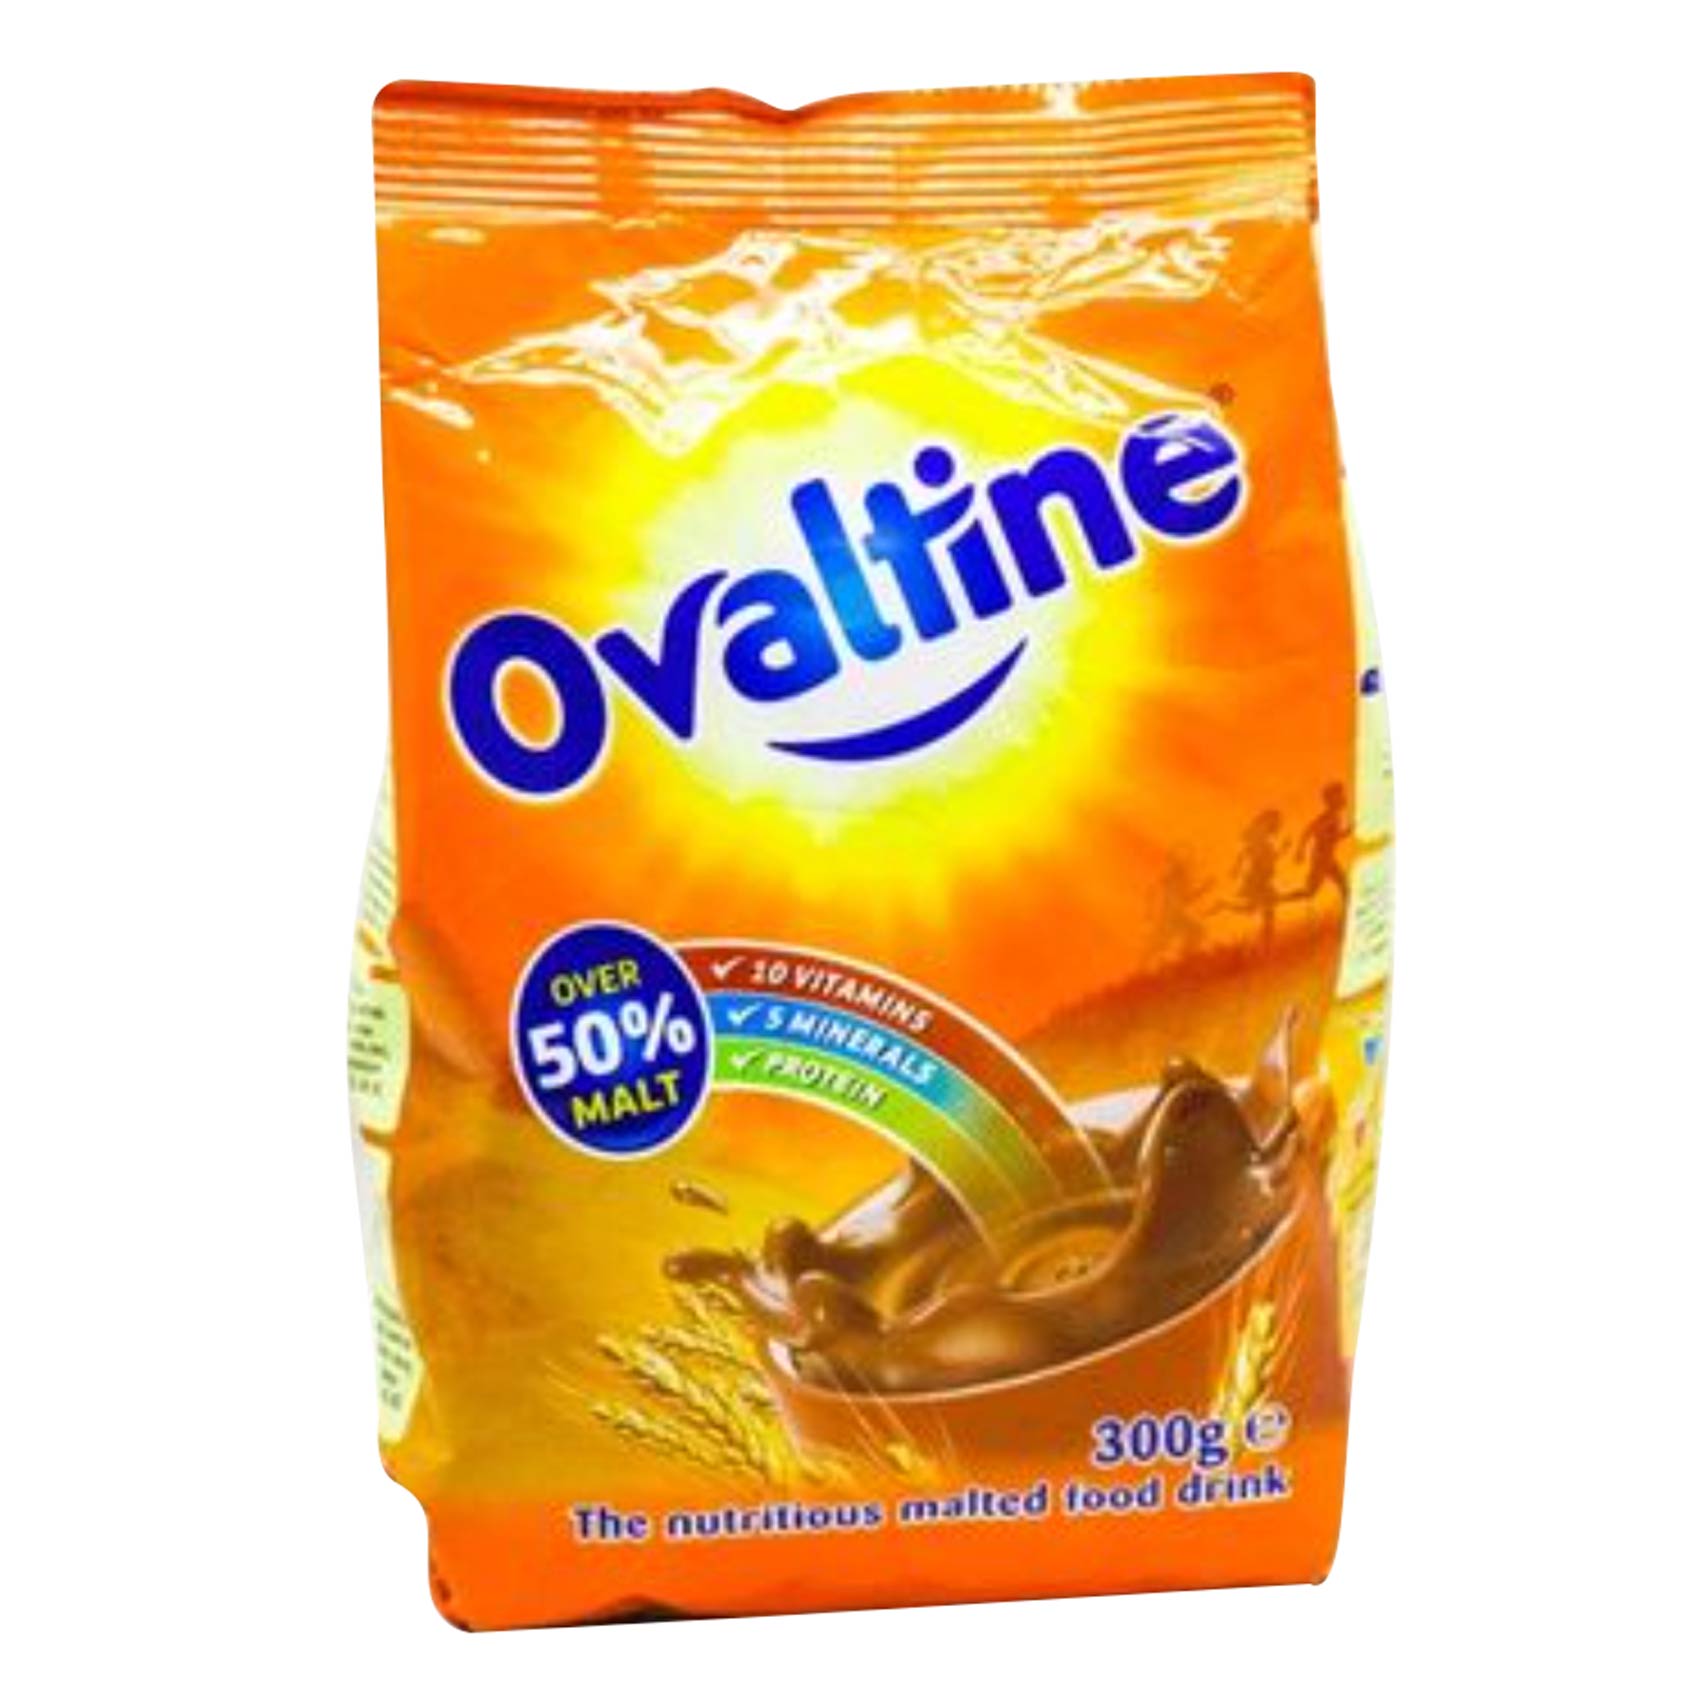 Ovaltine Cocoa Drink Powder 300g